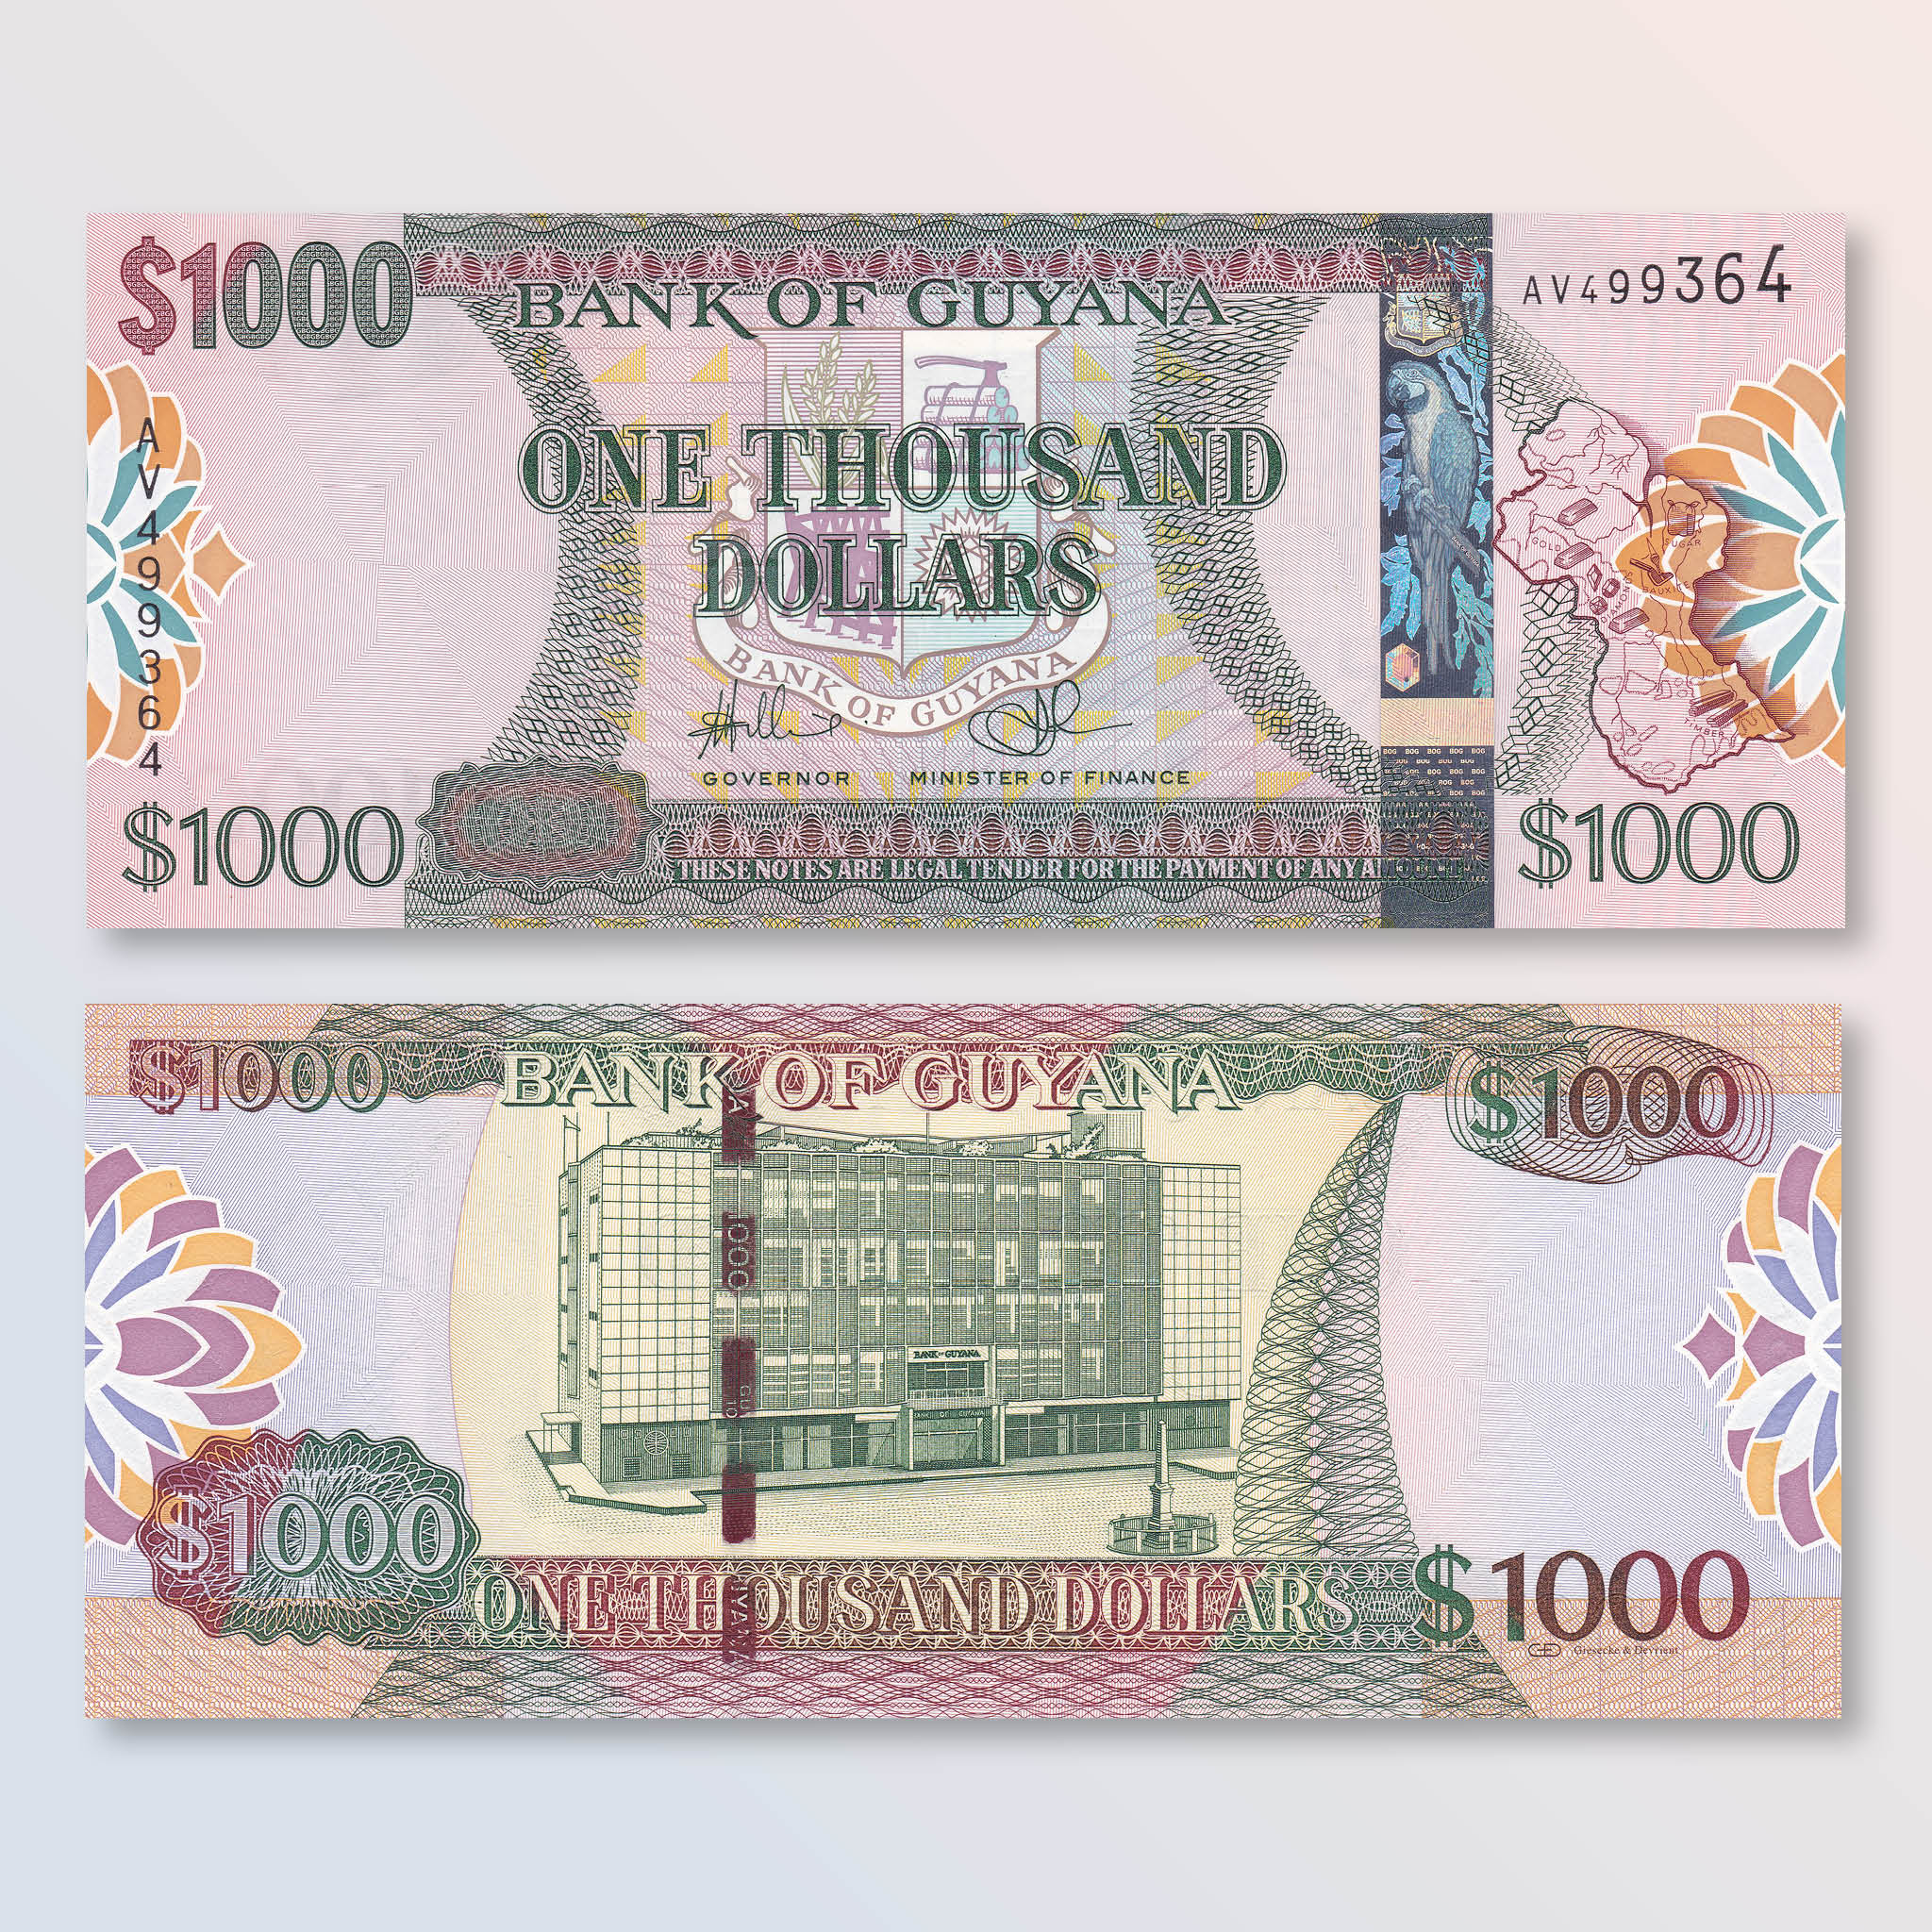 Guyana 1000 Dollars, 2011, B117a, P39b, UNC - Robert's World Money - World Banknotes